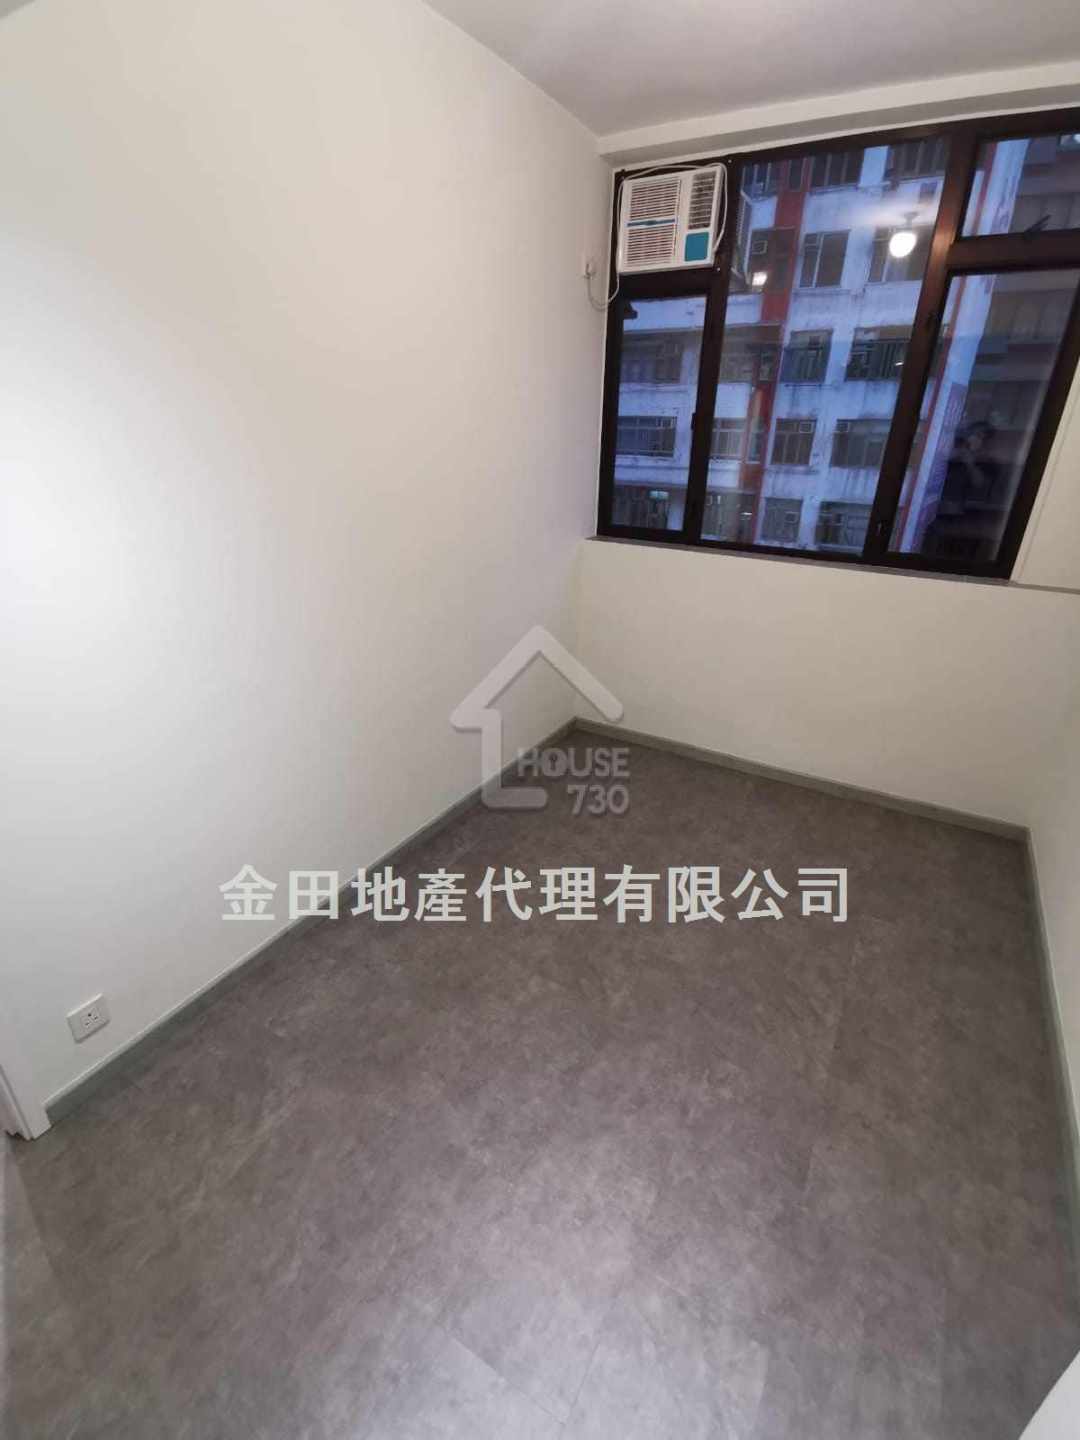 Causeway Bay ISLAND BUILDING Lower Floor Master Room House730-6282622